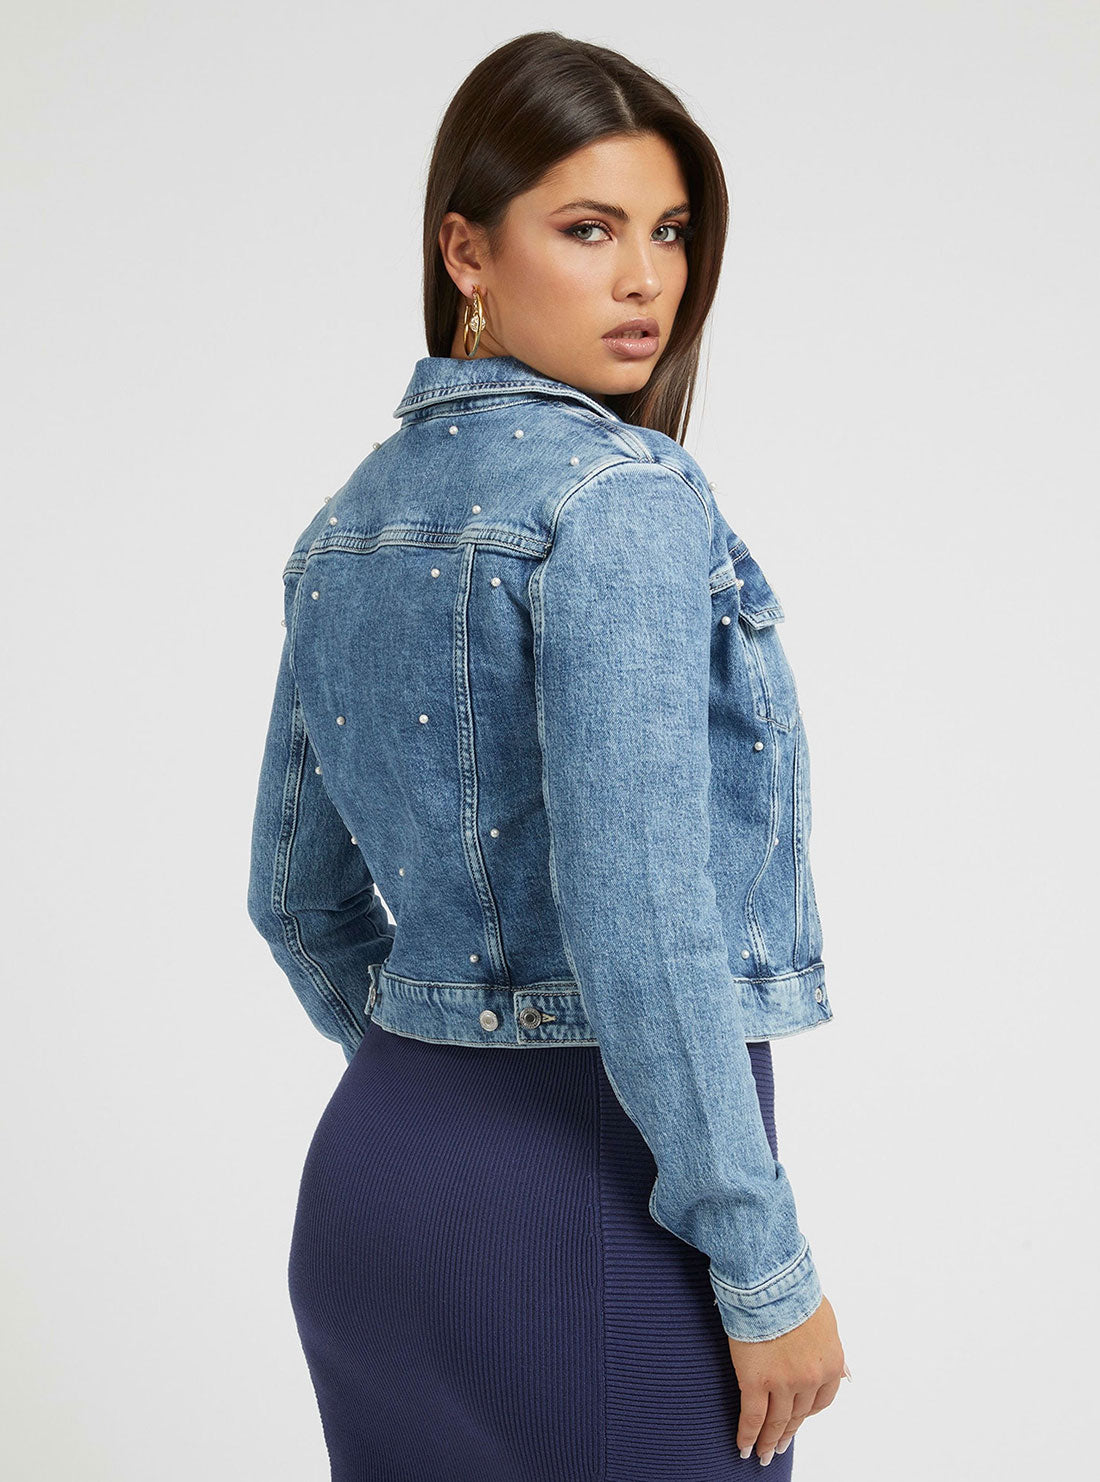 Blue Adoria Denim Jacket | GUESS Women's | Back view